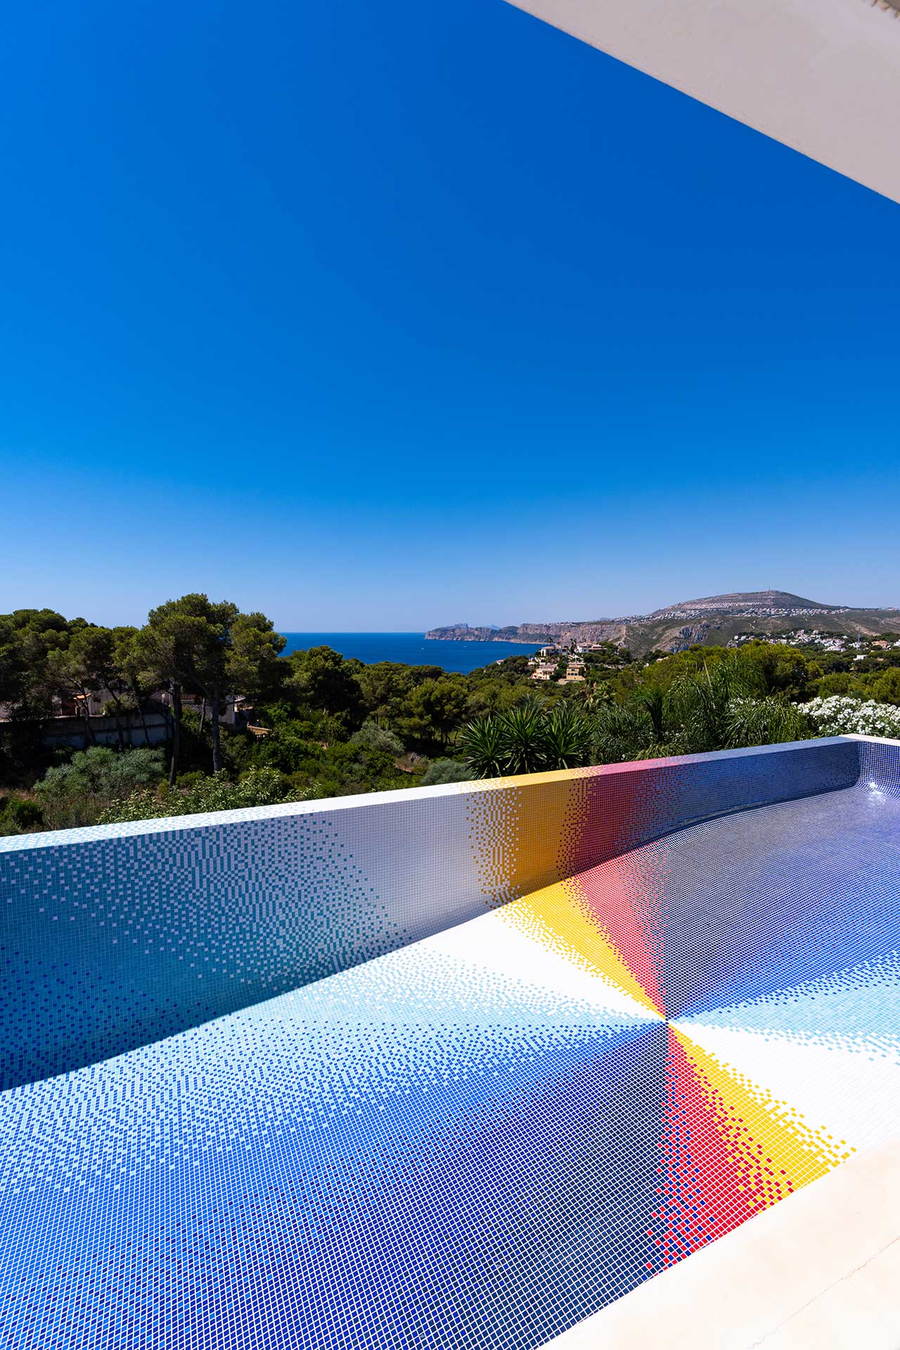 Felipe Pantone's colorful pinwheel pool design in Javea, Spain. 